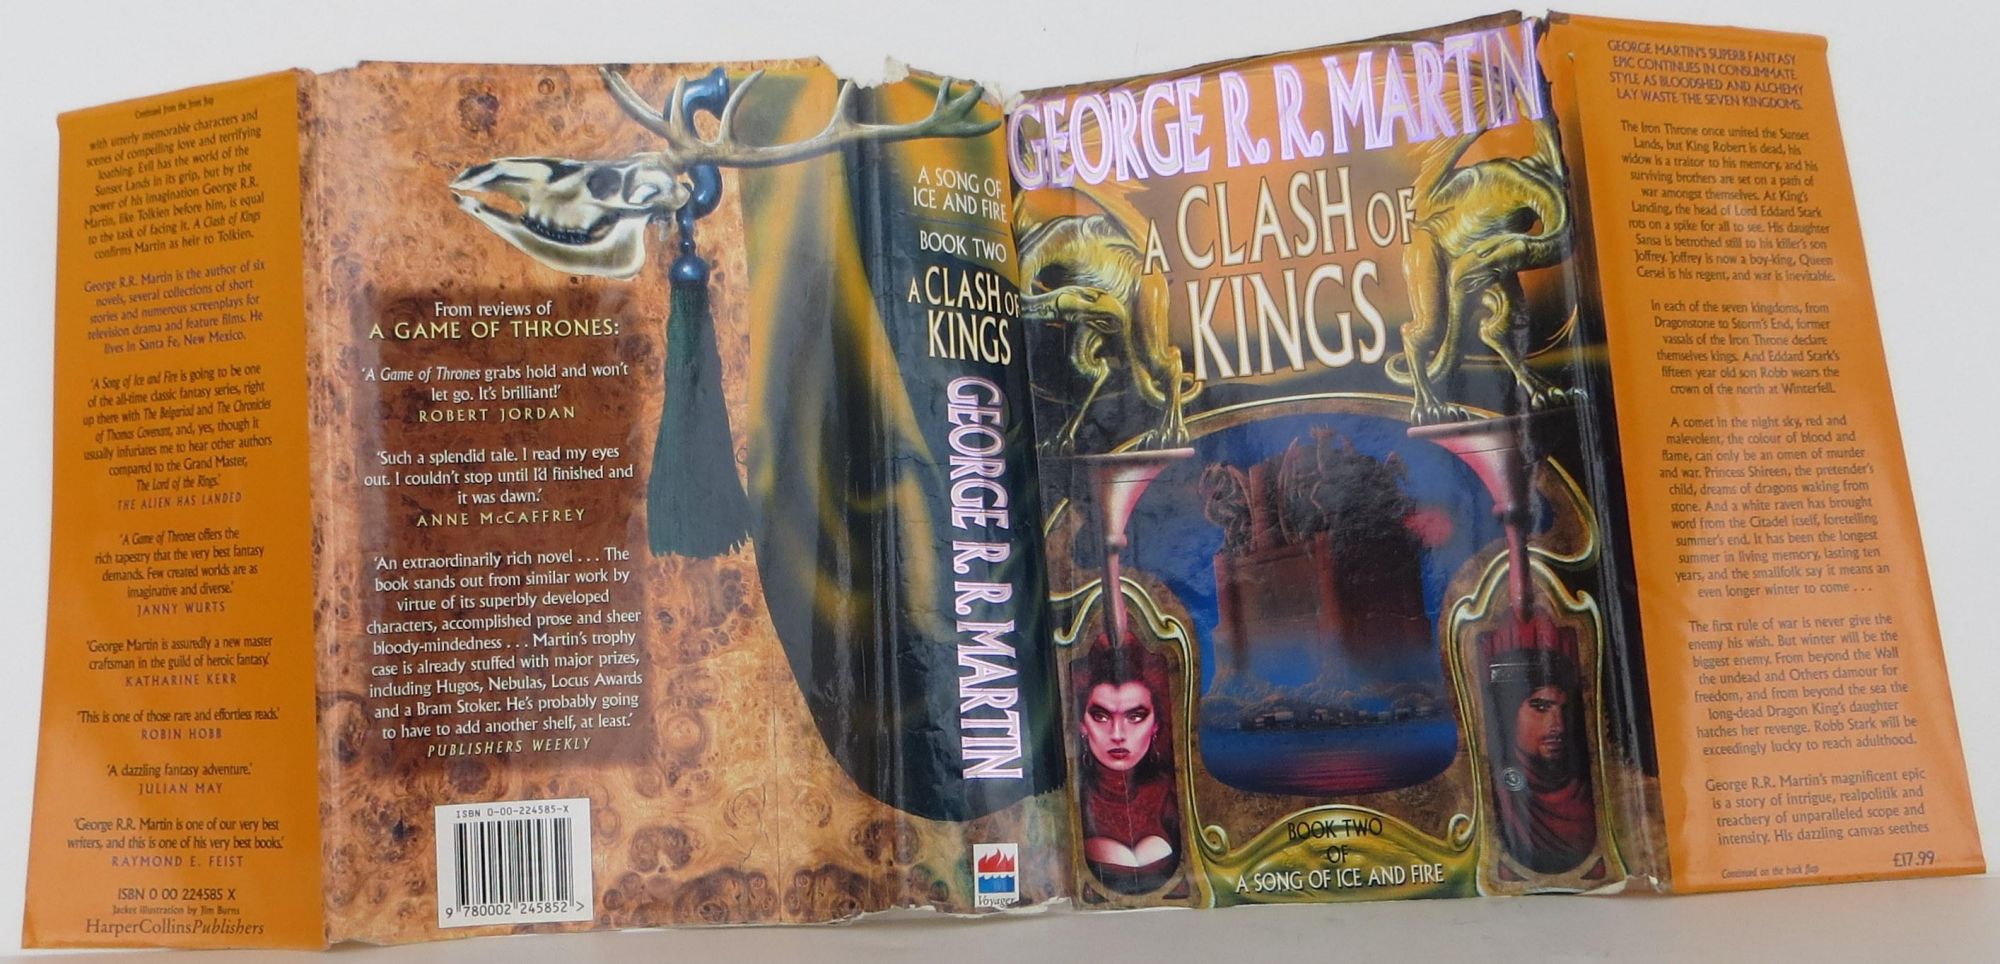 A Clash of Kings by George R. R. Martin on Bookbid Rare Books